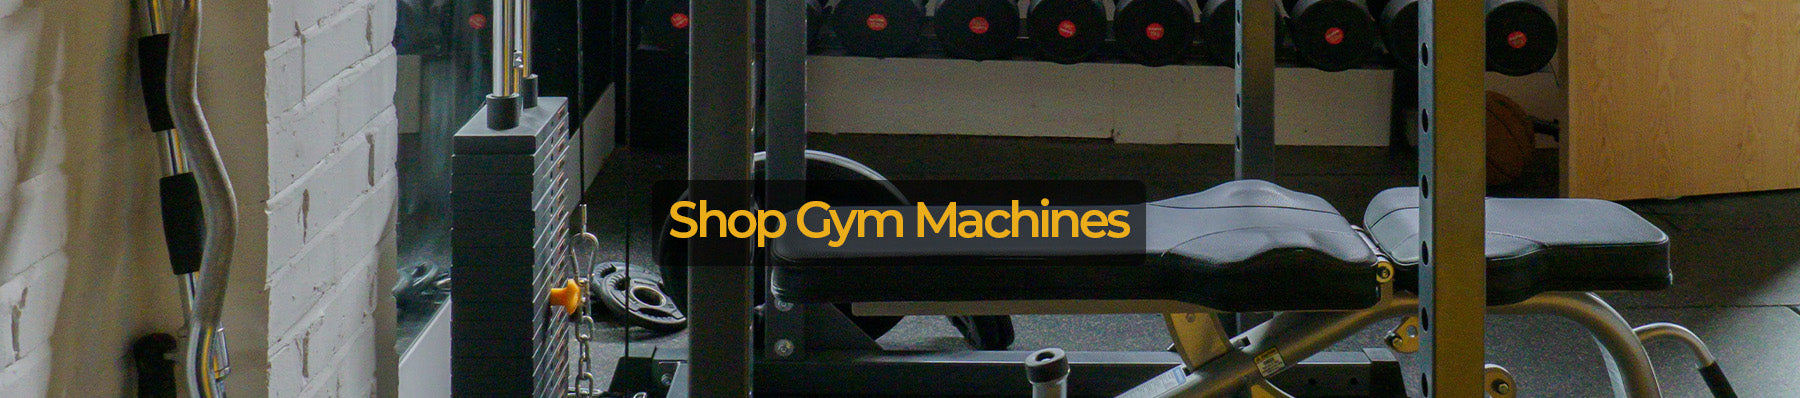 Shop Gym Machines